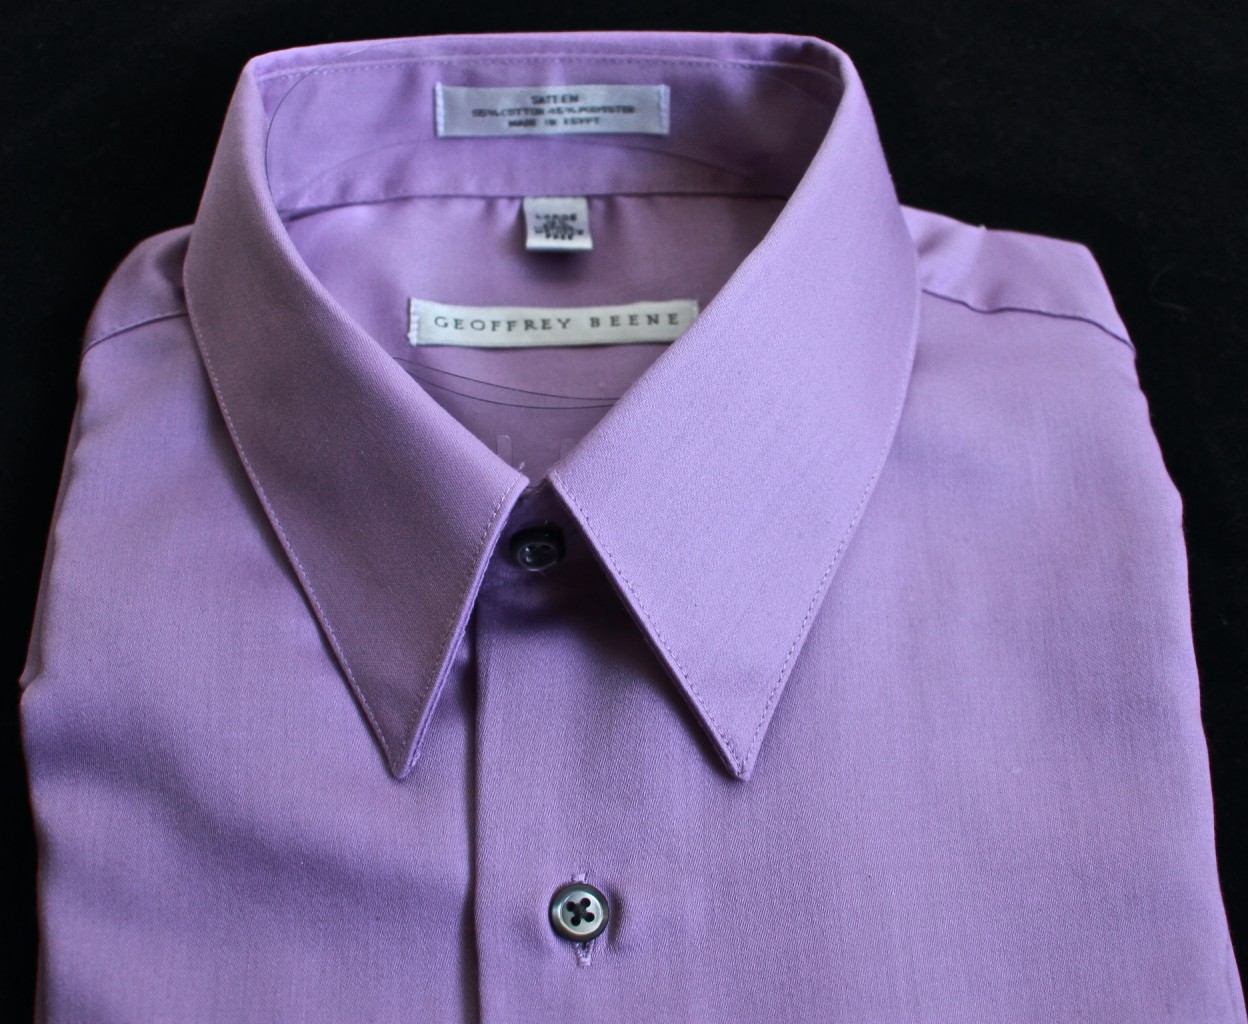 Men's GEOFFREY BEENE Sateen Dress Shirt THISTLE PURPLE | eBay